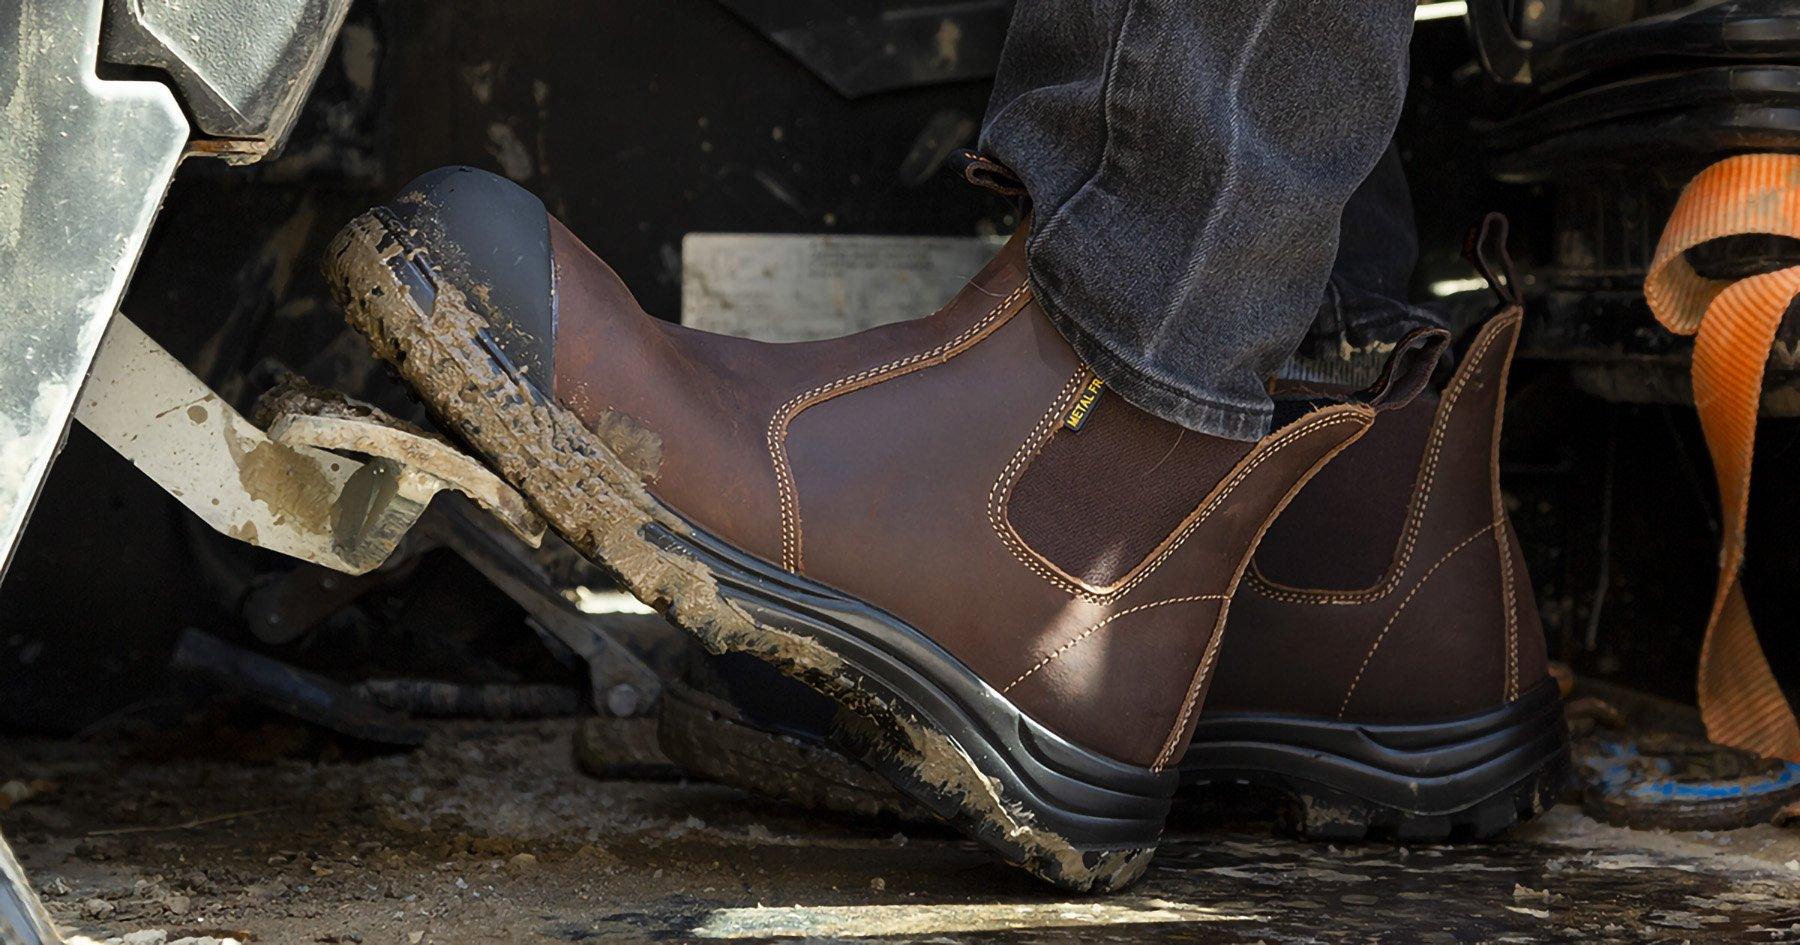 Comfortable Steel Toe Boots for Men - MooseLog